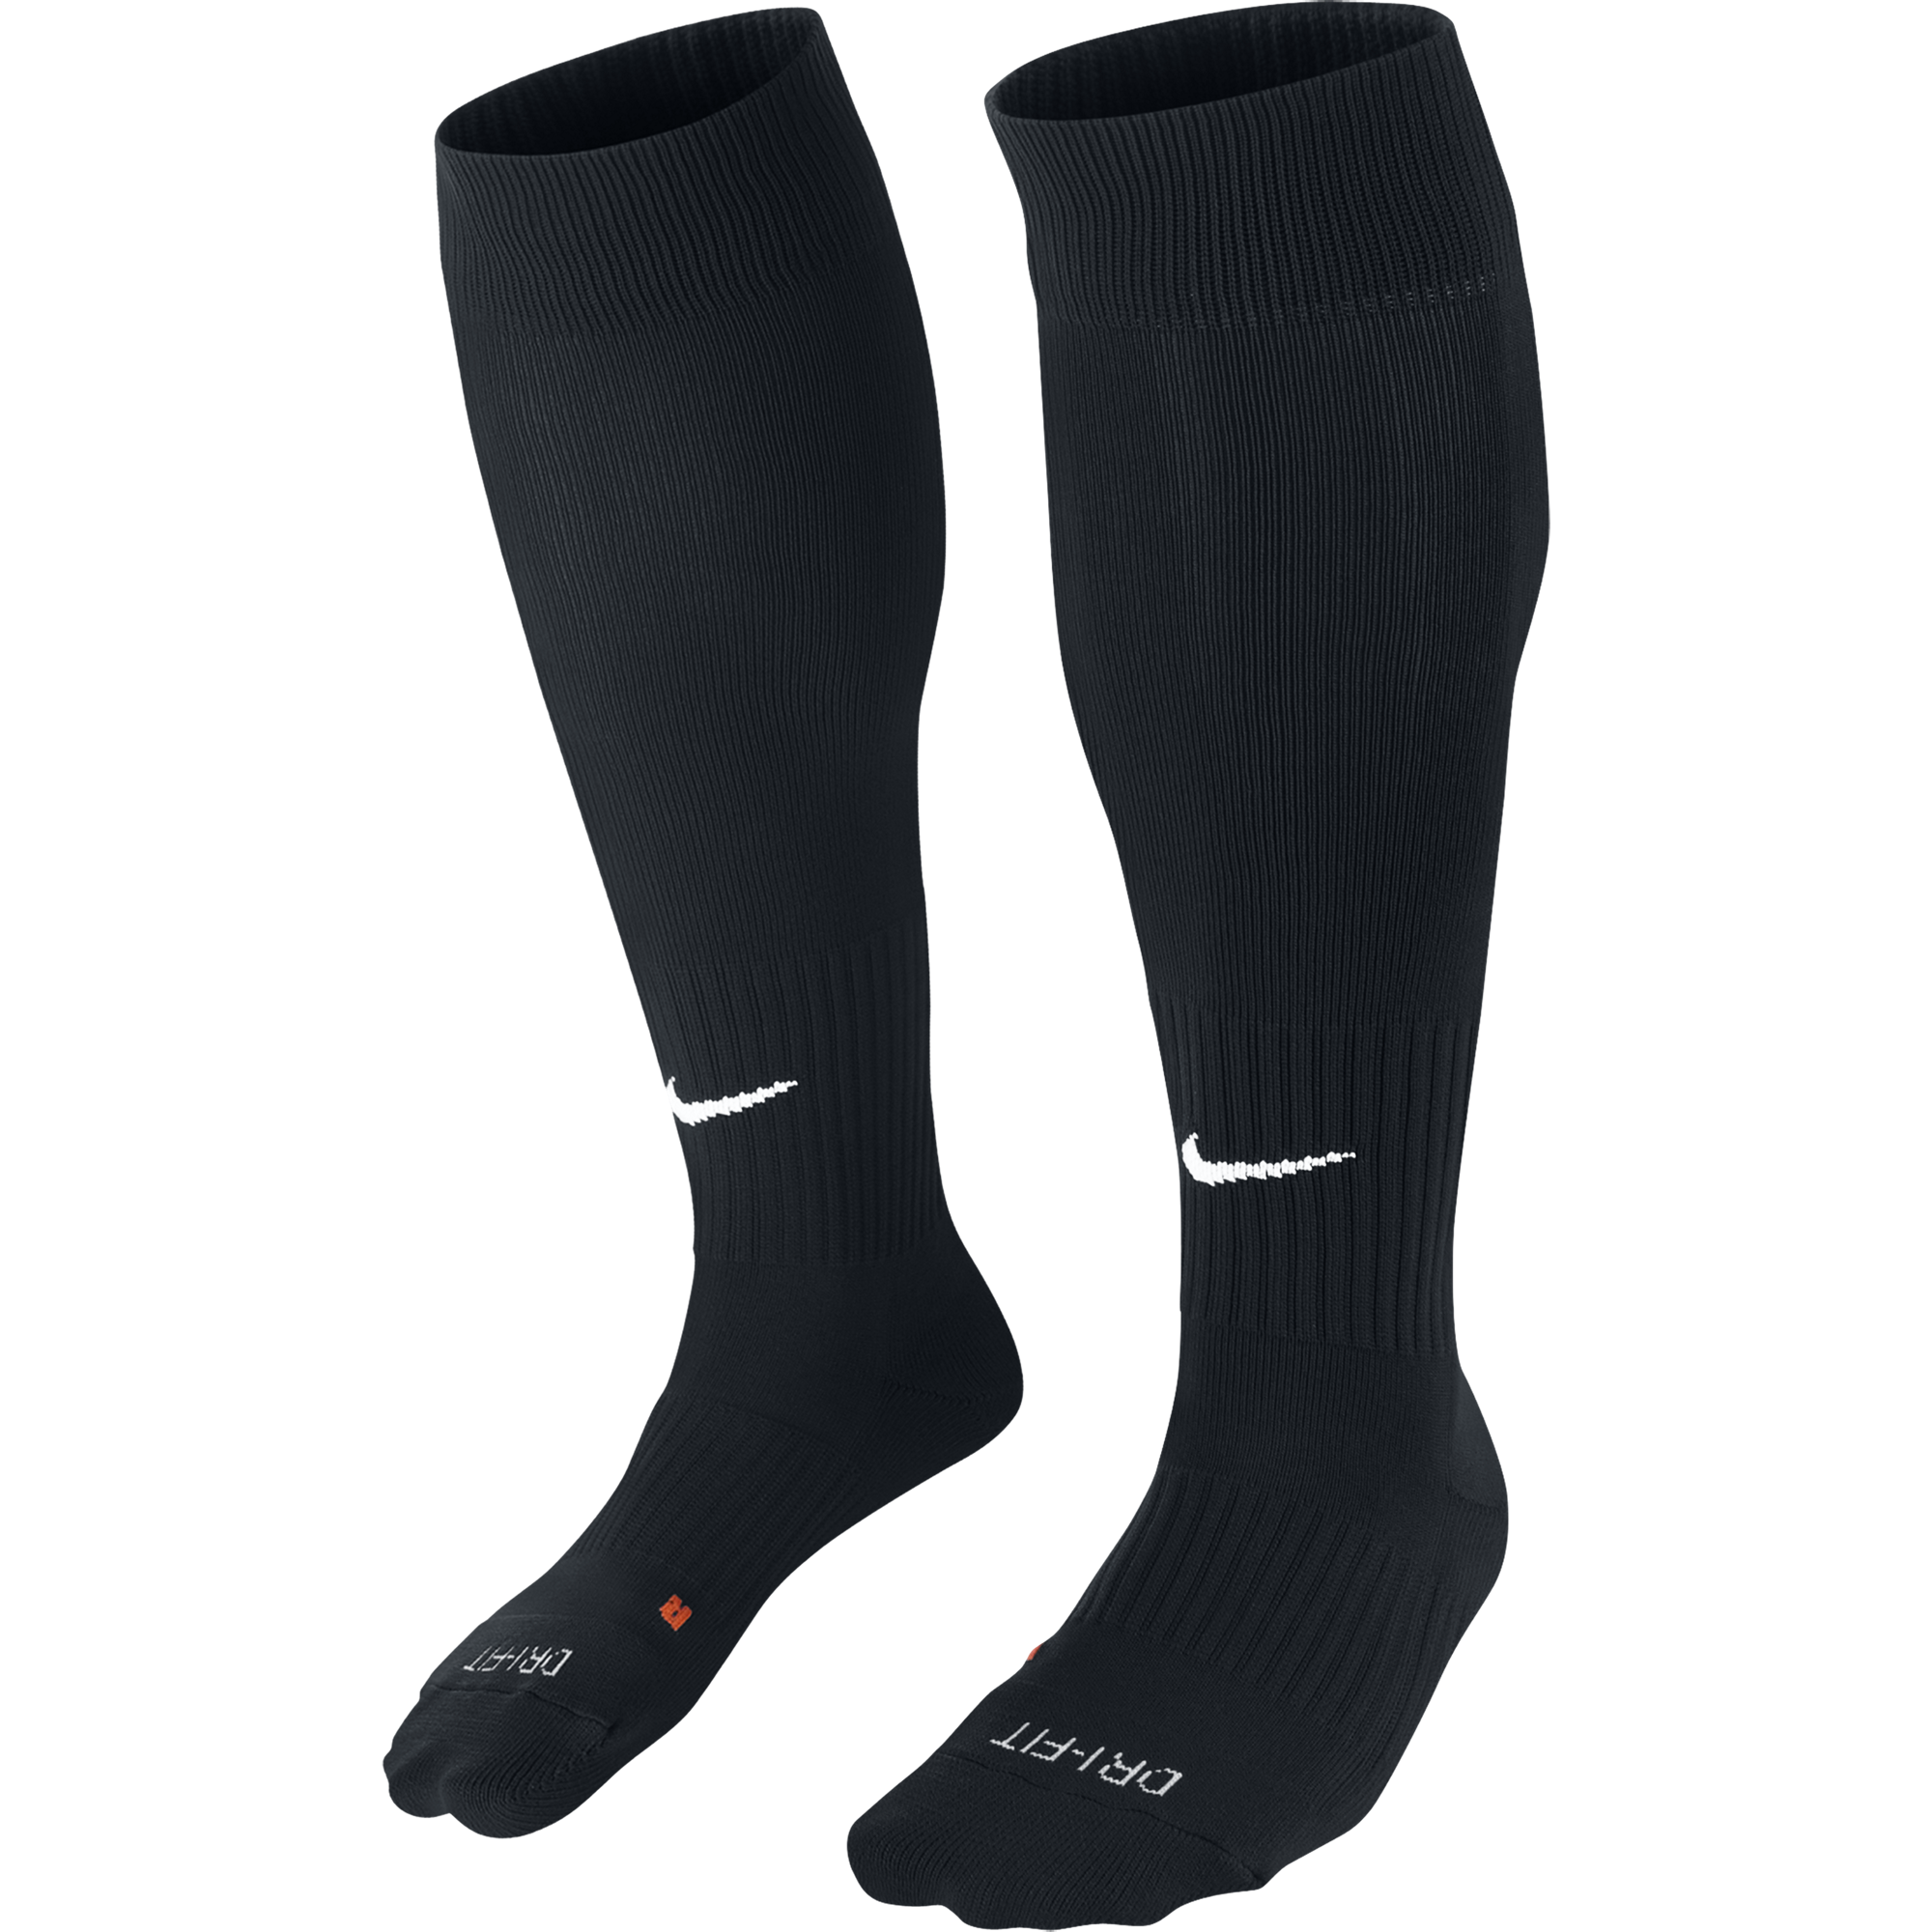 SW Performance Coaching - Nike classic socks, Black.